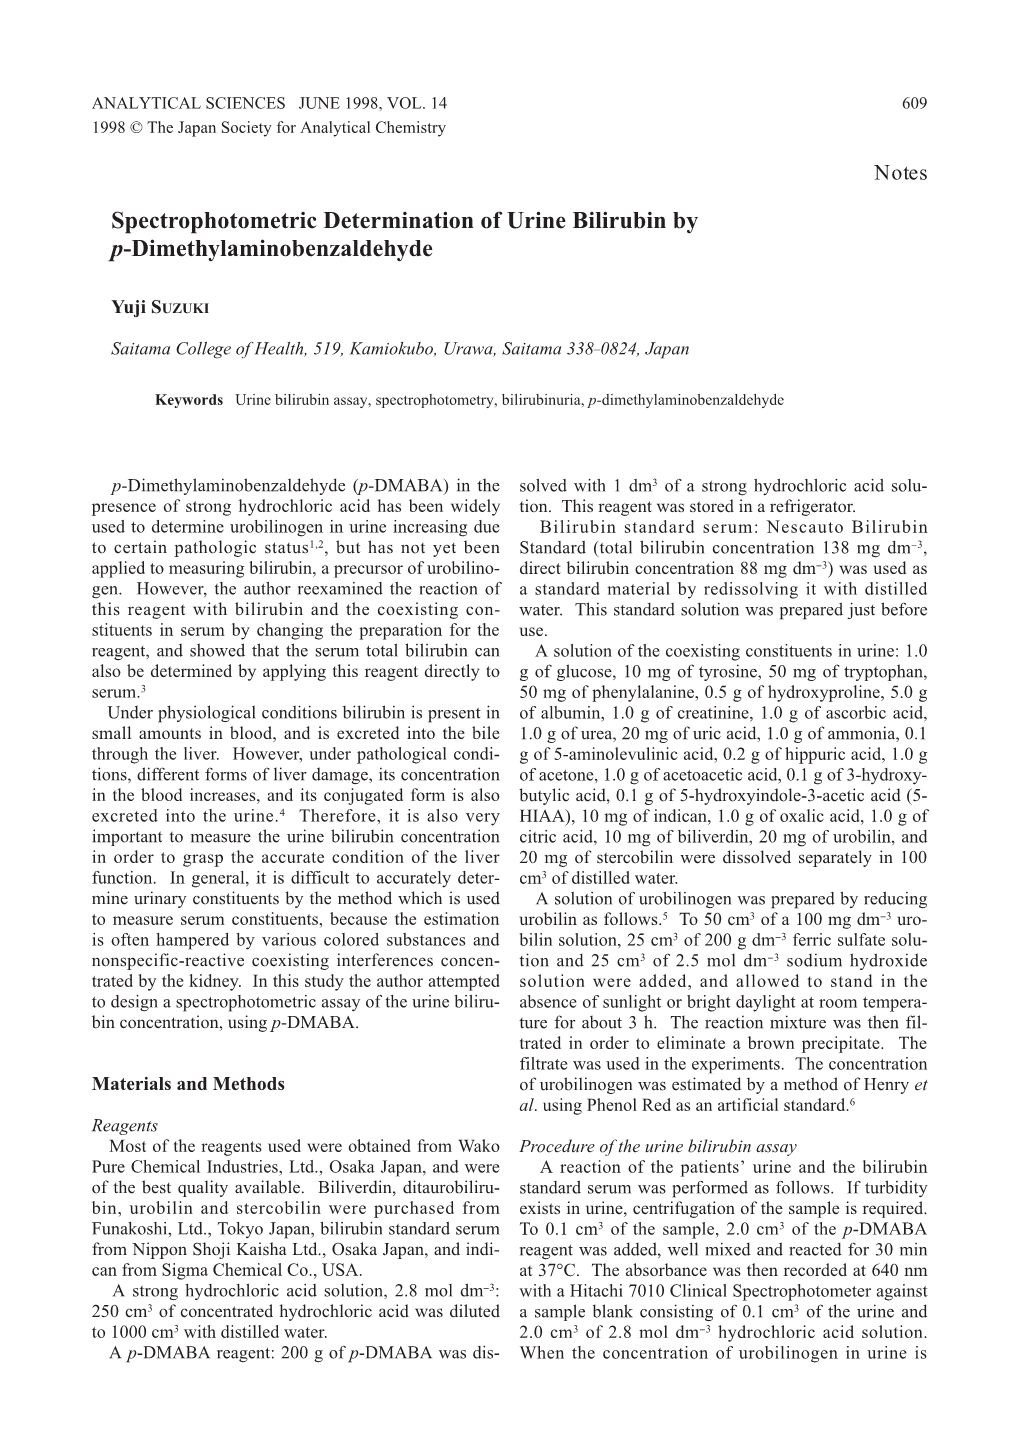 Spectrophotometric Determination of Urine Bilirubin by P-Dimethylaminobenzaldehyde